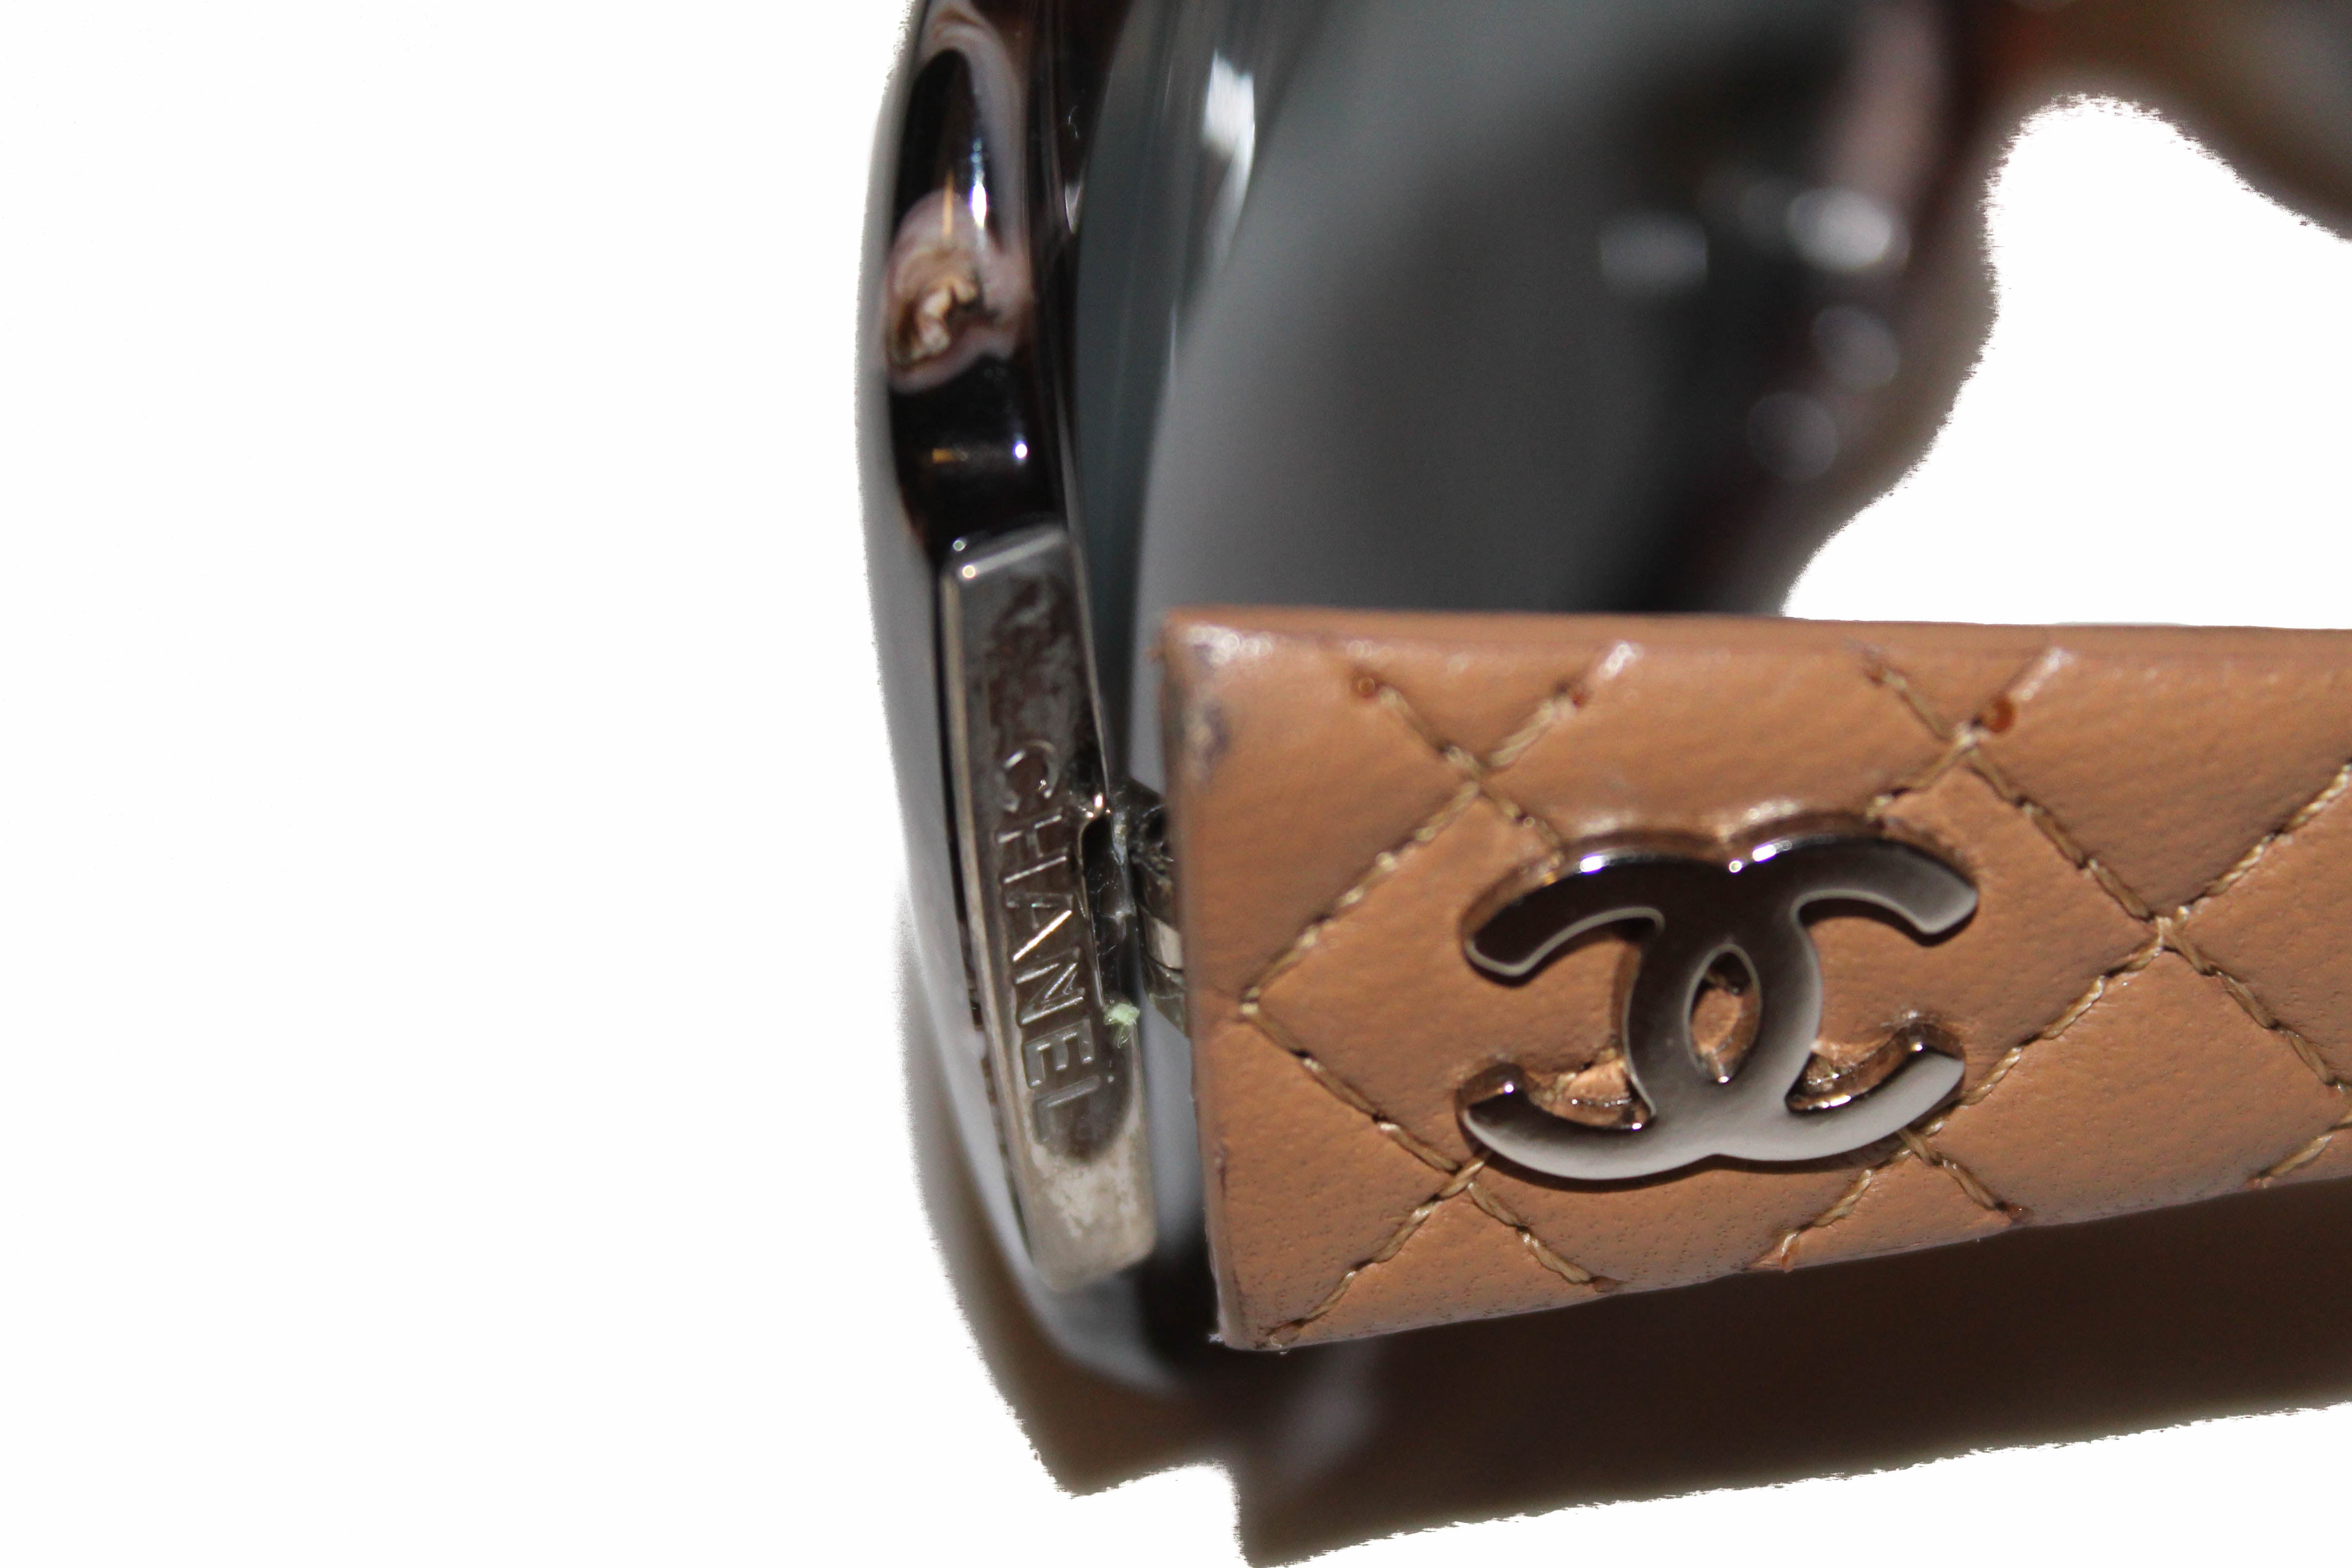 Authentic Chanel Beige Quilted Leather Sunglasses 5116-Q – Paris